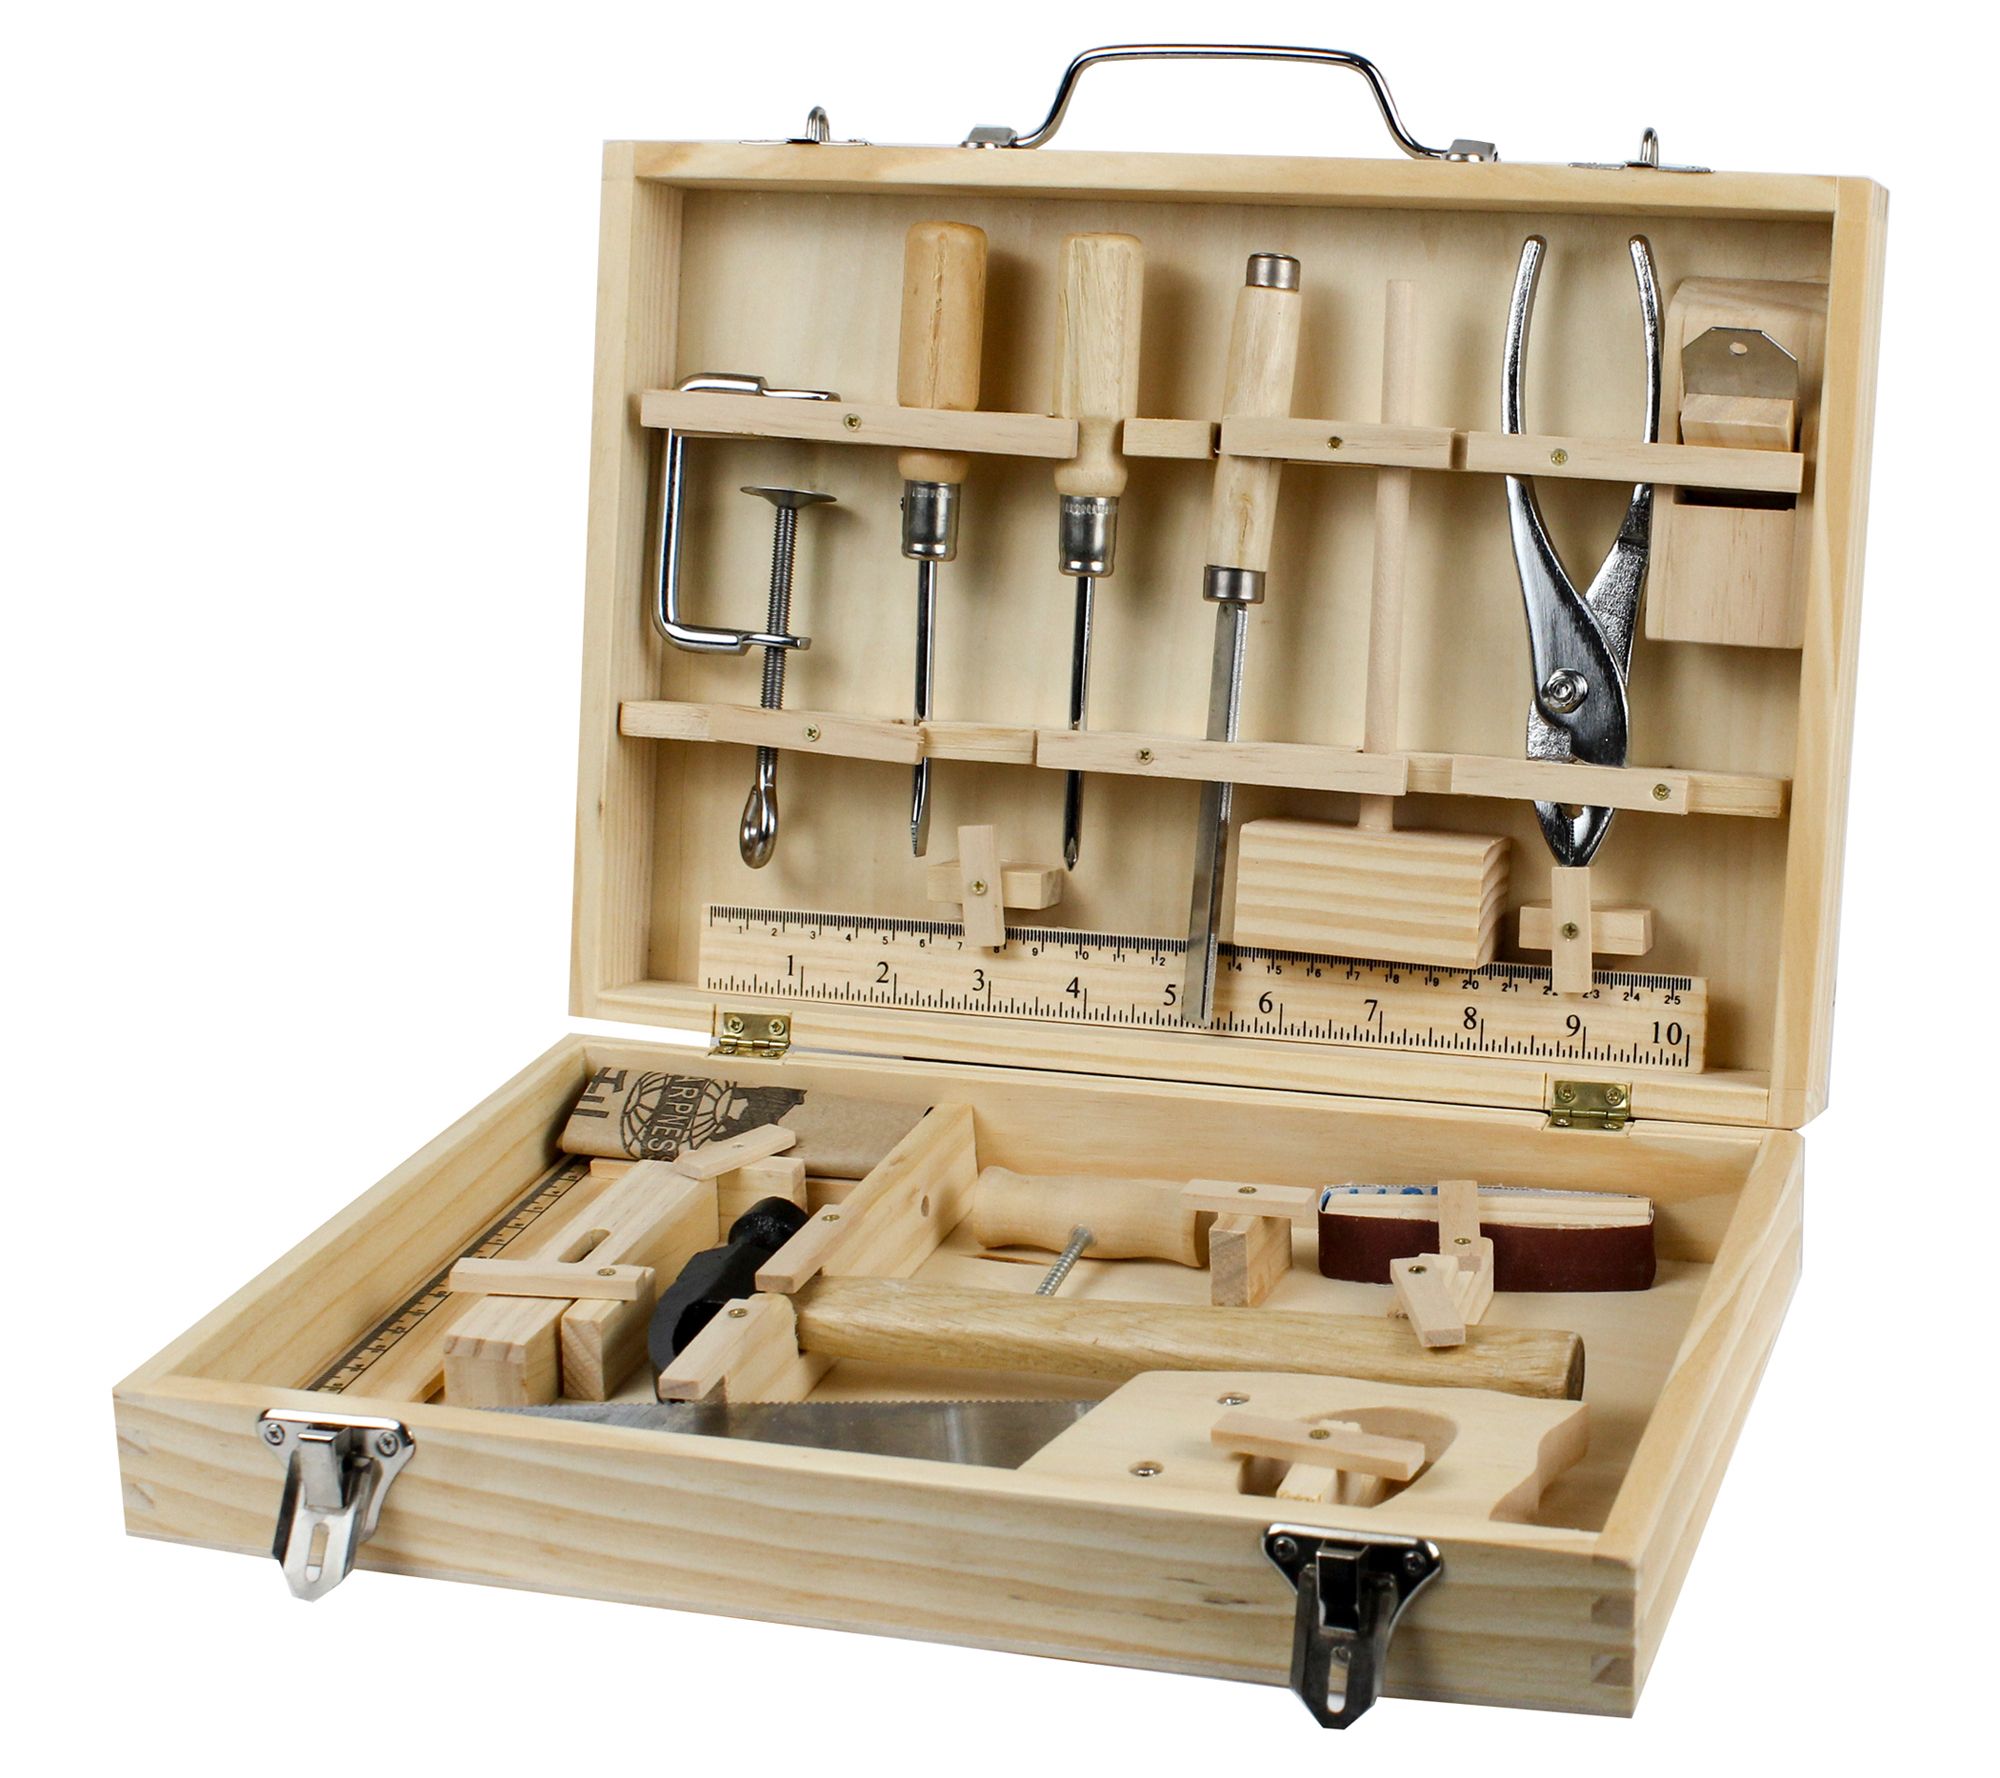 Tool Box Kit  Woodworking kit for kids, Tool box kit, Wood tool box